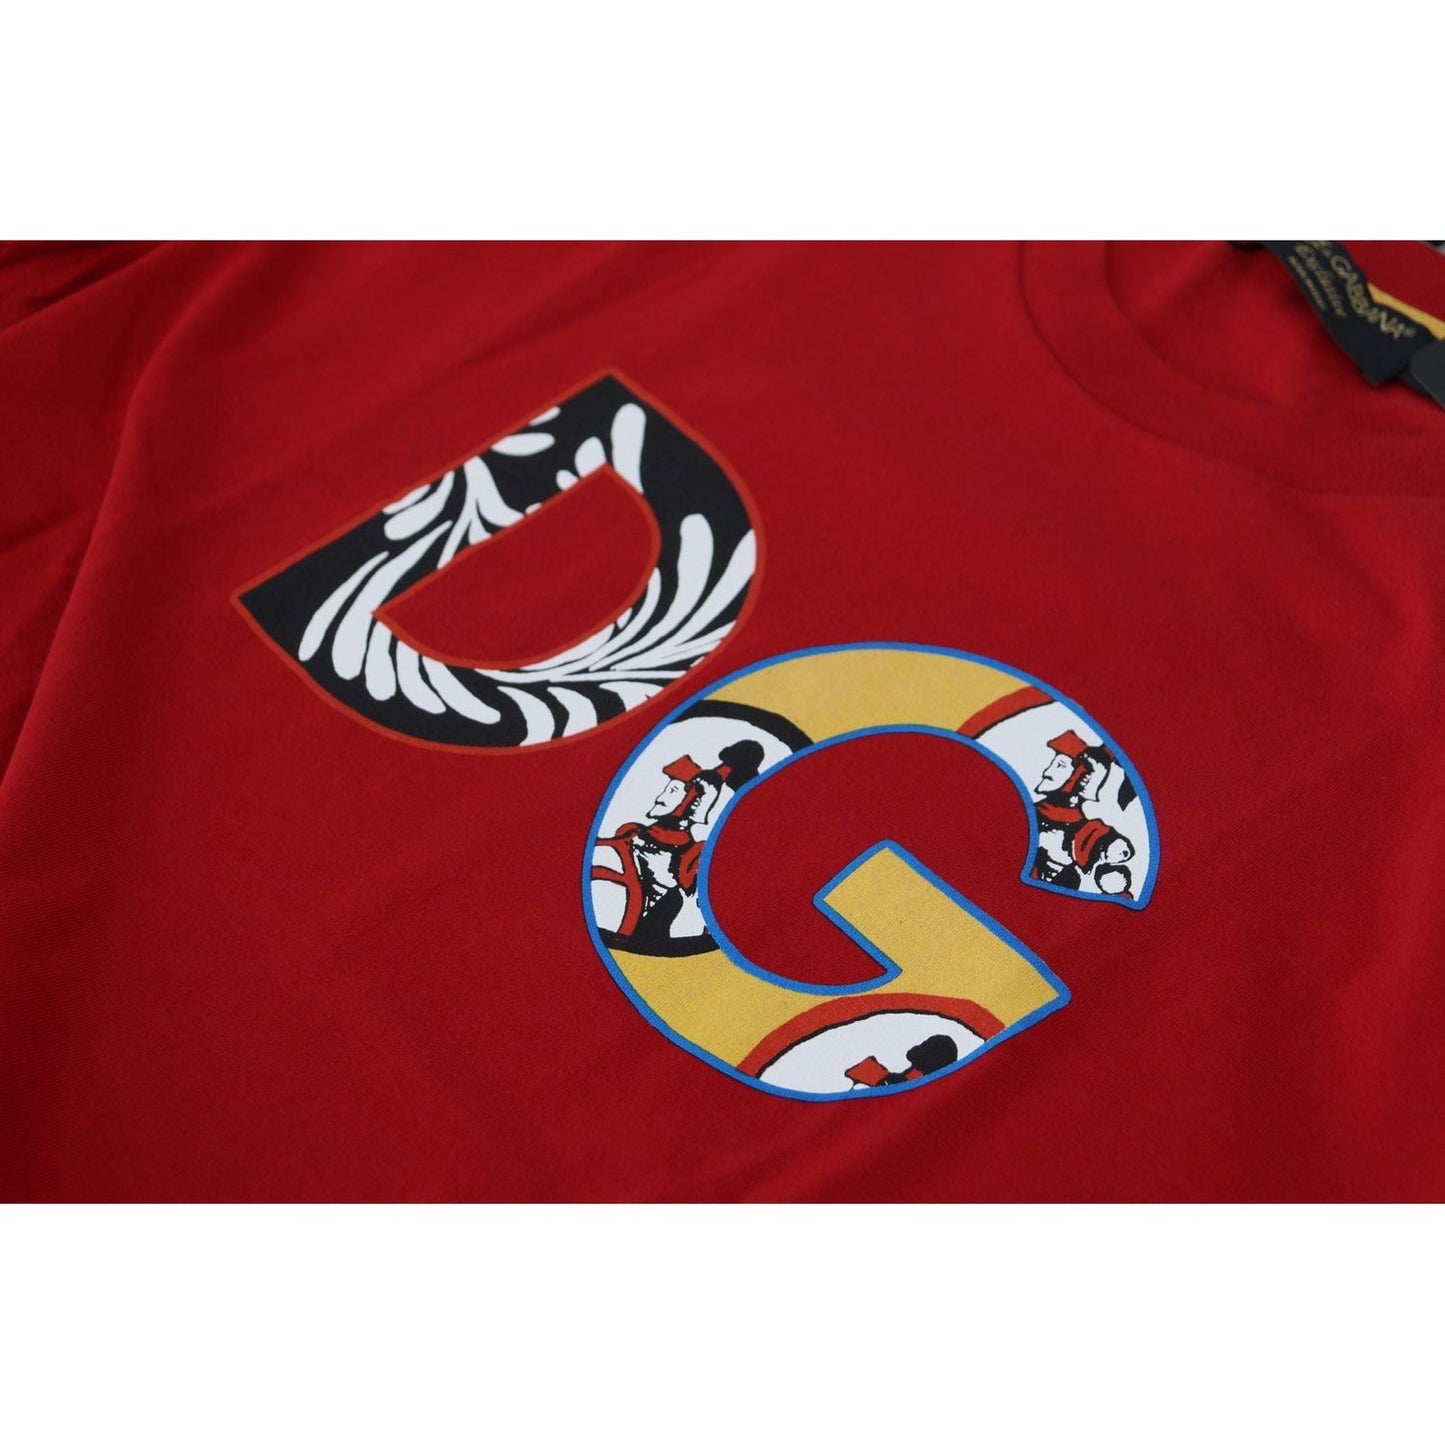 Dolce & Gabbana Exclusive Crewneck Logo T-Shirt in Red red-dg-logo-crewneck-top-exclusive-t-shirt IMG_8113-scaled-6c9feffb-9d8.jpg